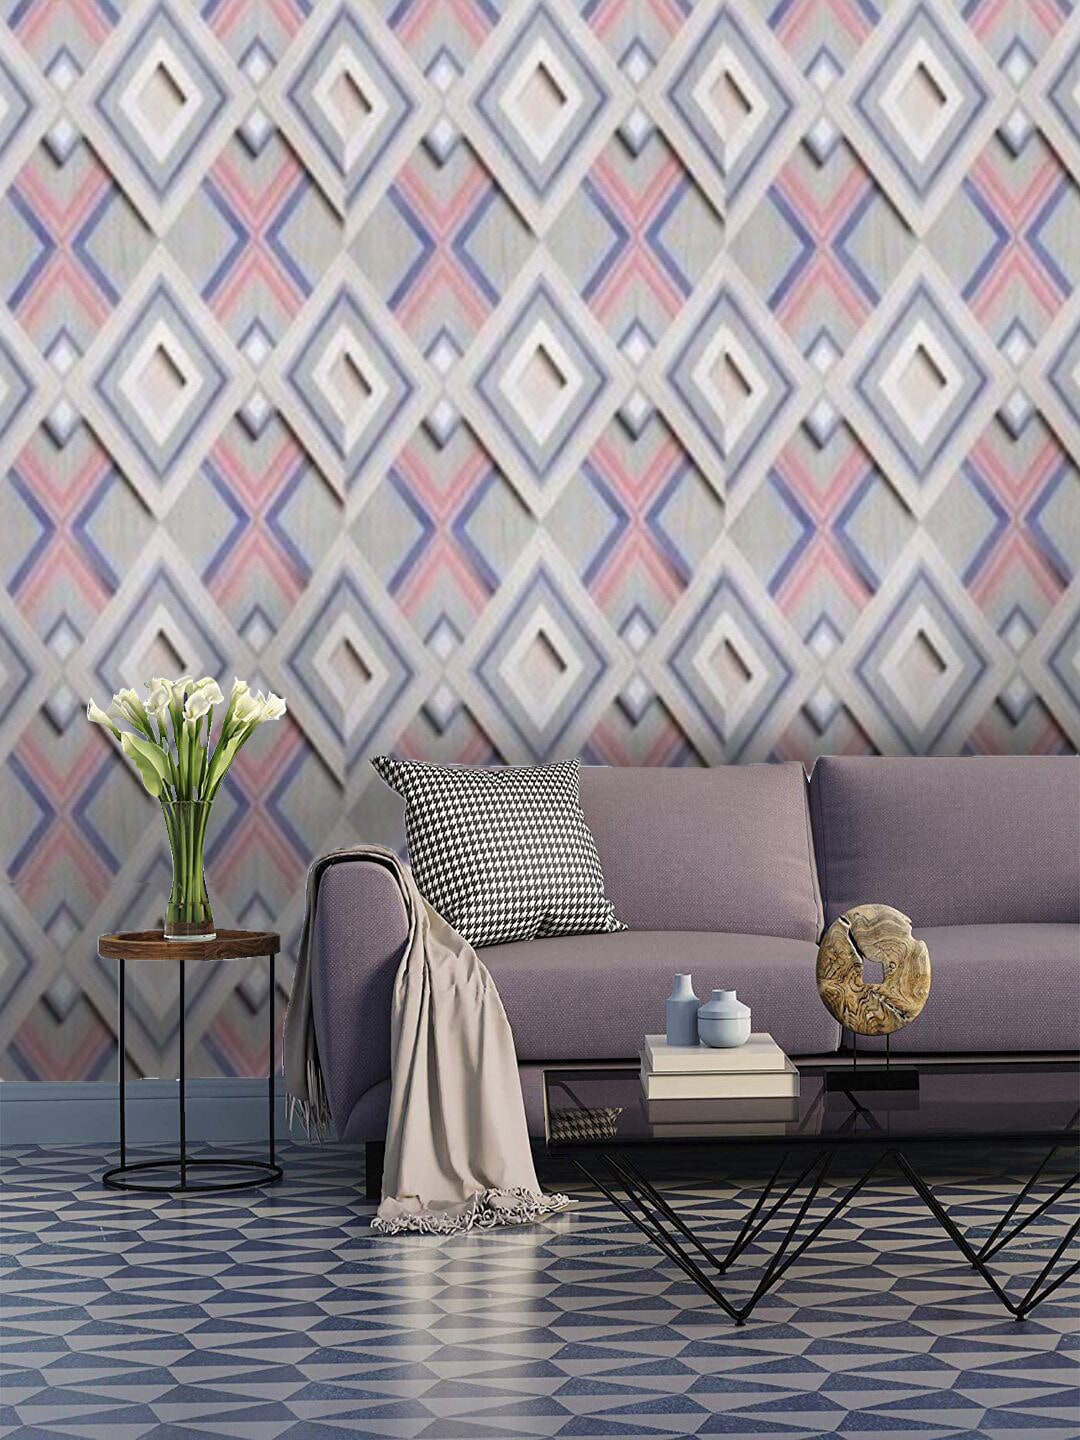 Jaamso Royals Pink & Grey Self-Adhesive & Waterproof Geometric Wallpaper Price in India